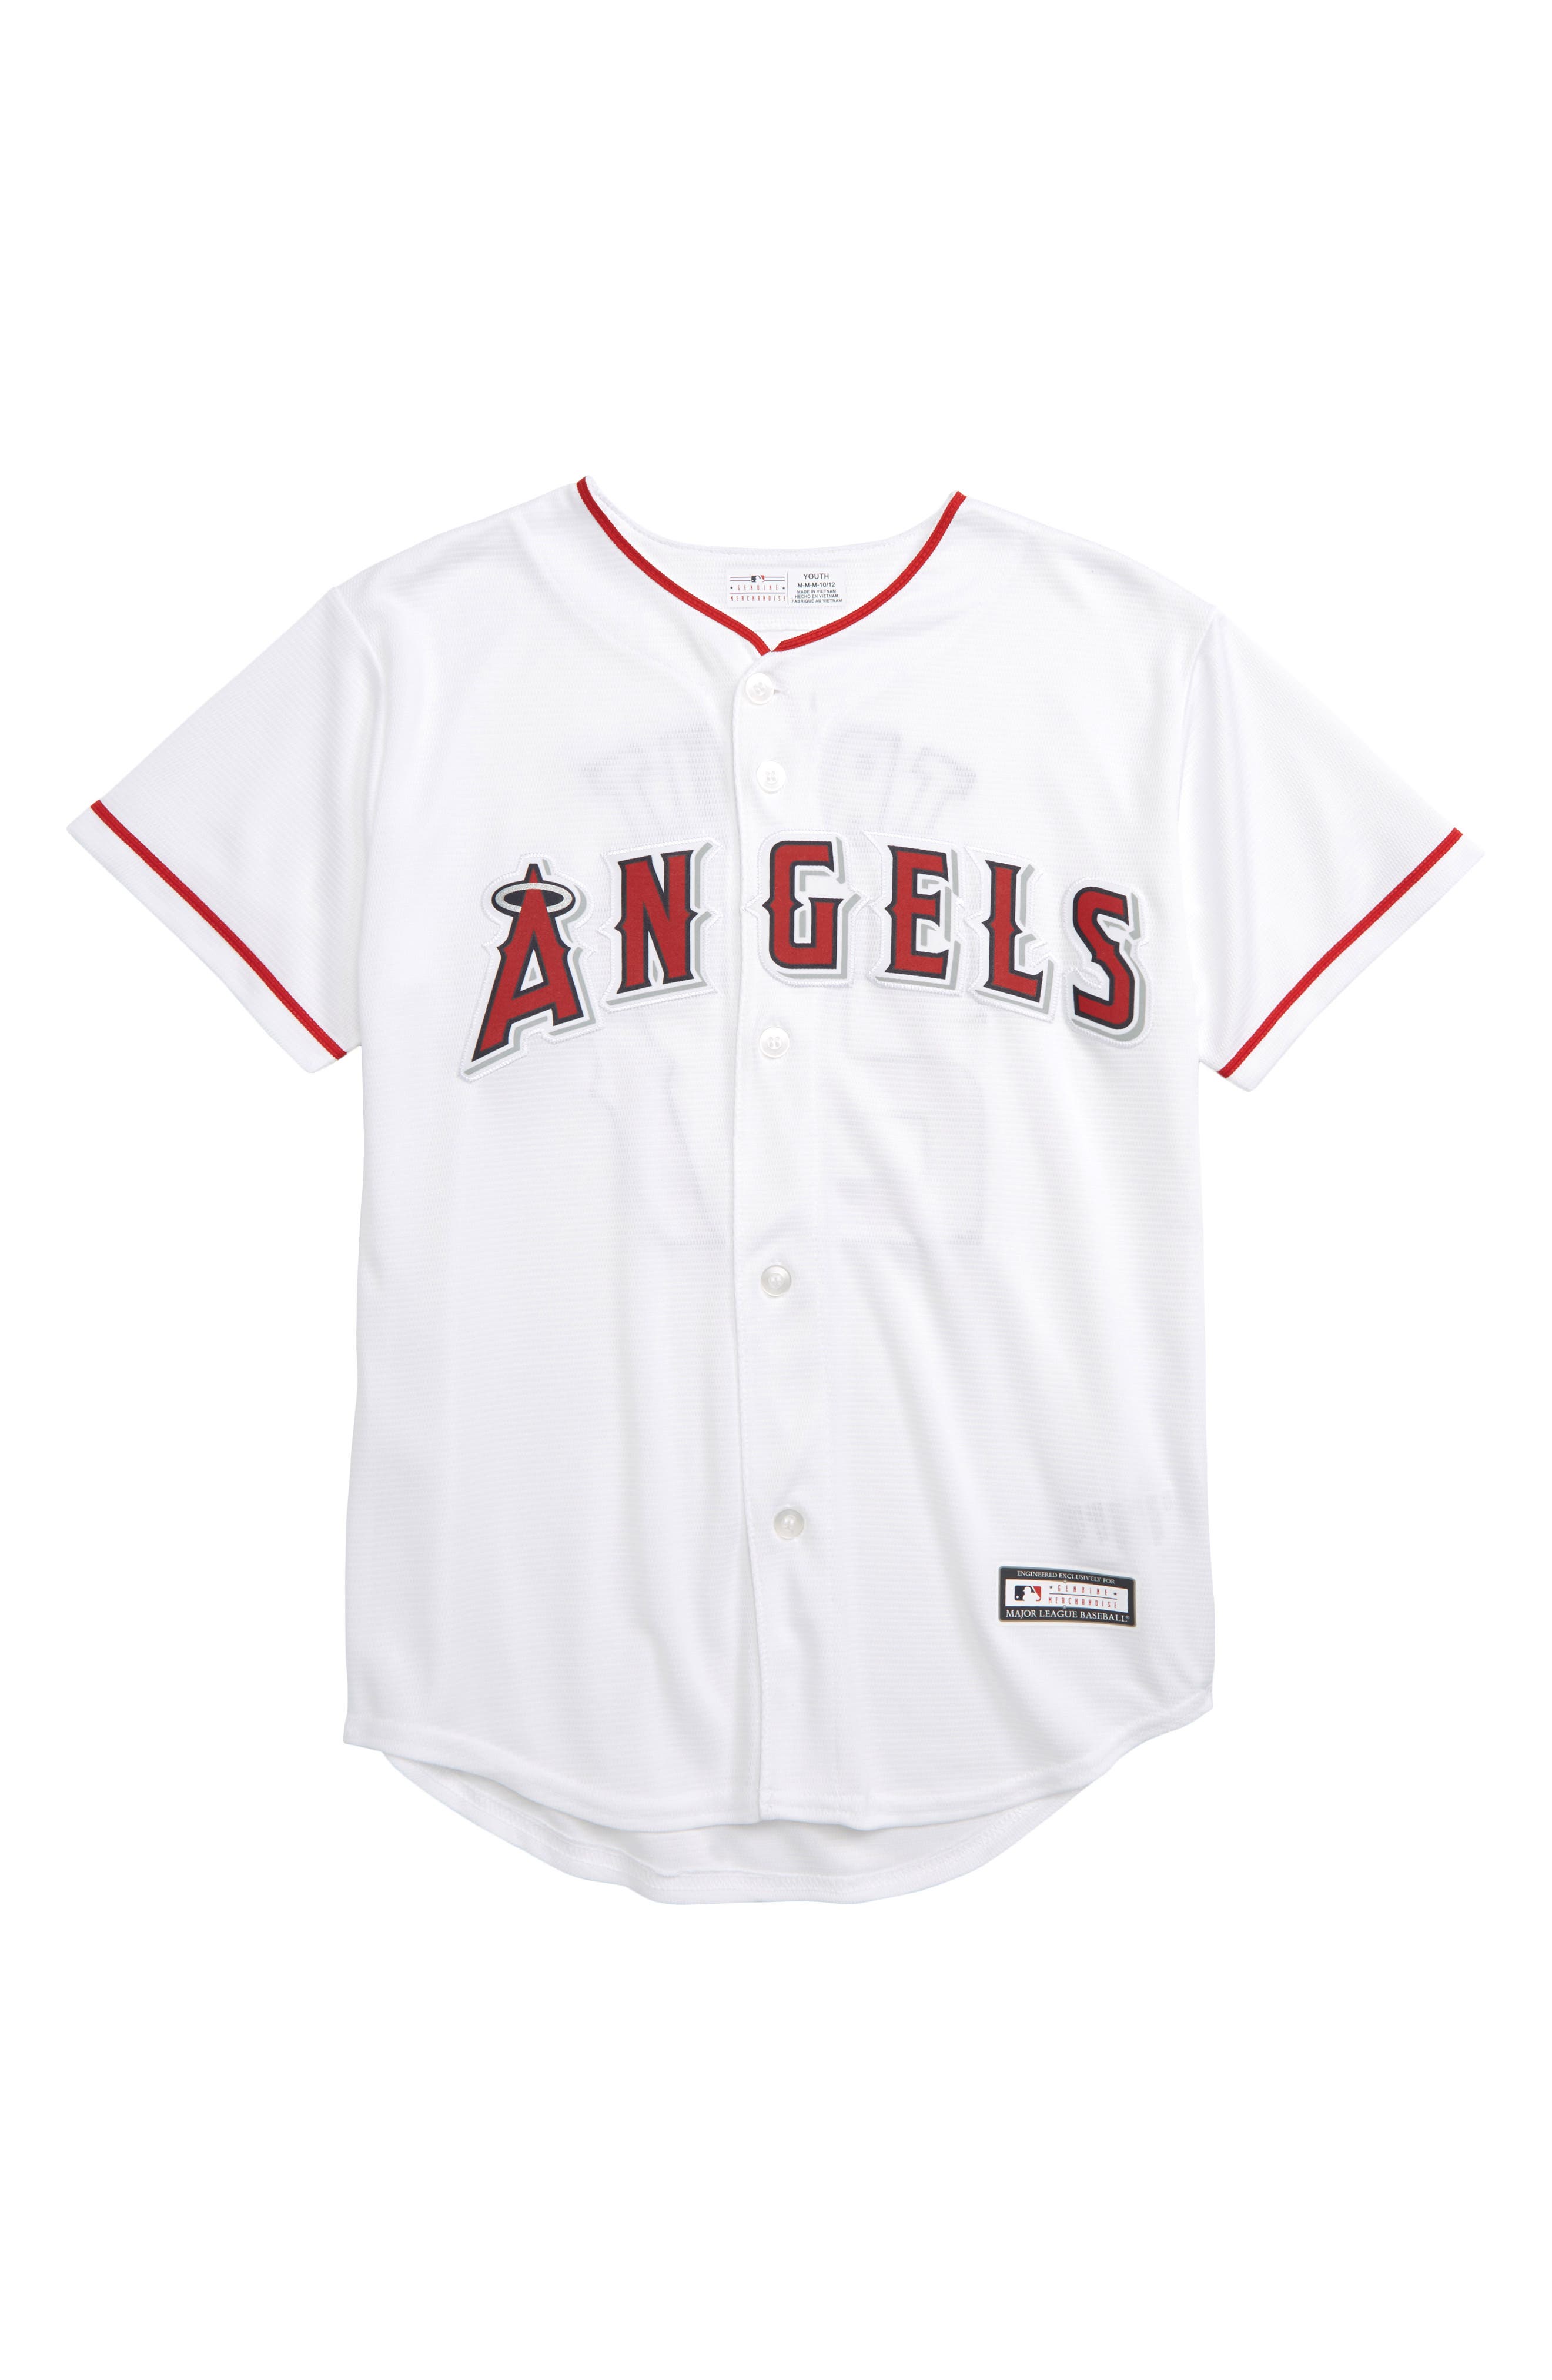 angels baseball jersey cheap